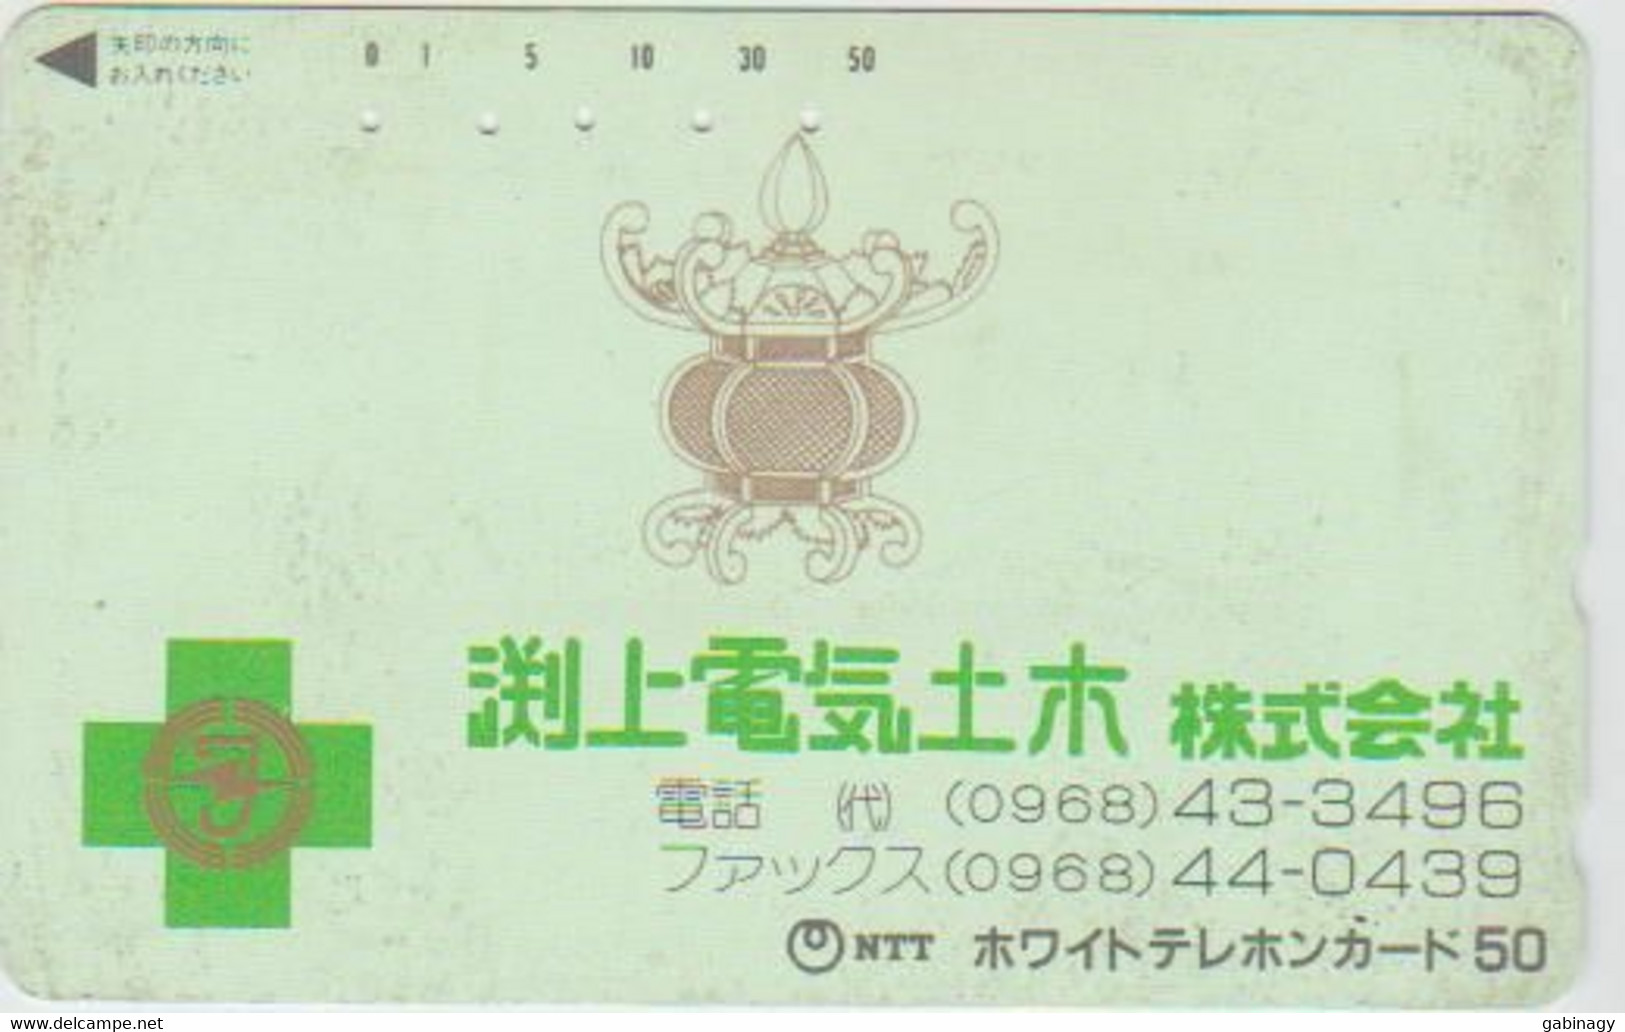 HEALTH - JAPAN-032 - GREEN CROSS - 110-011 - Culture